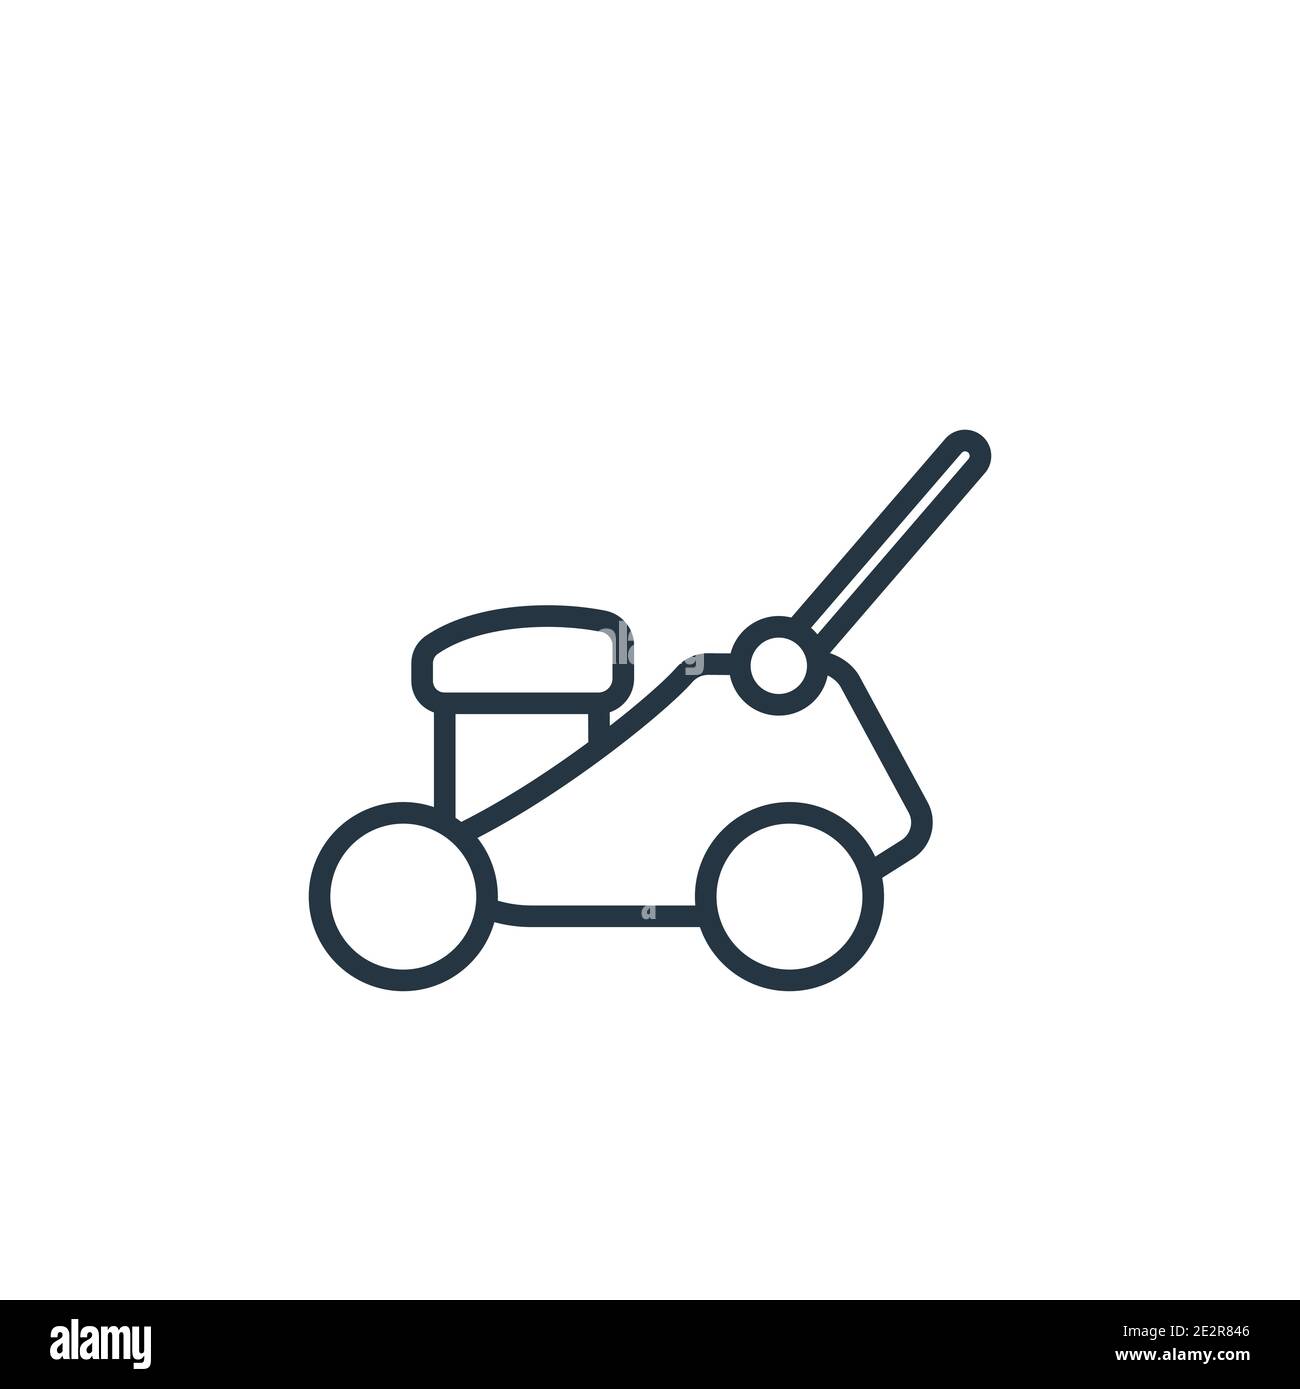 Premium Vector  Lawn mower icon